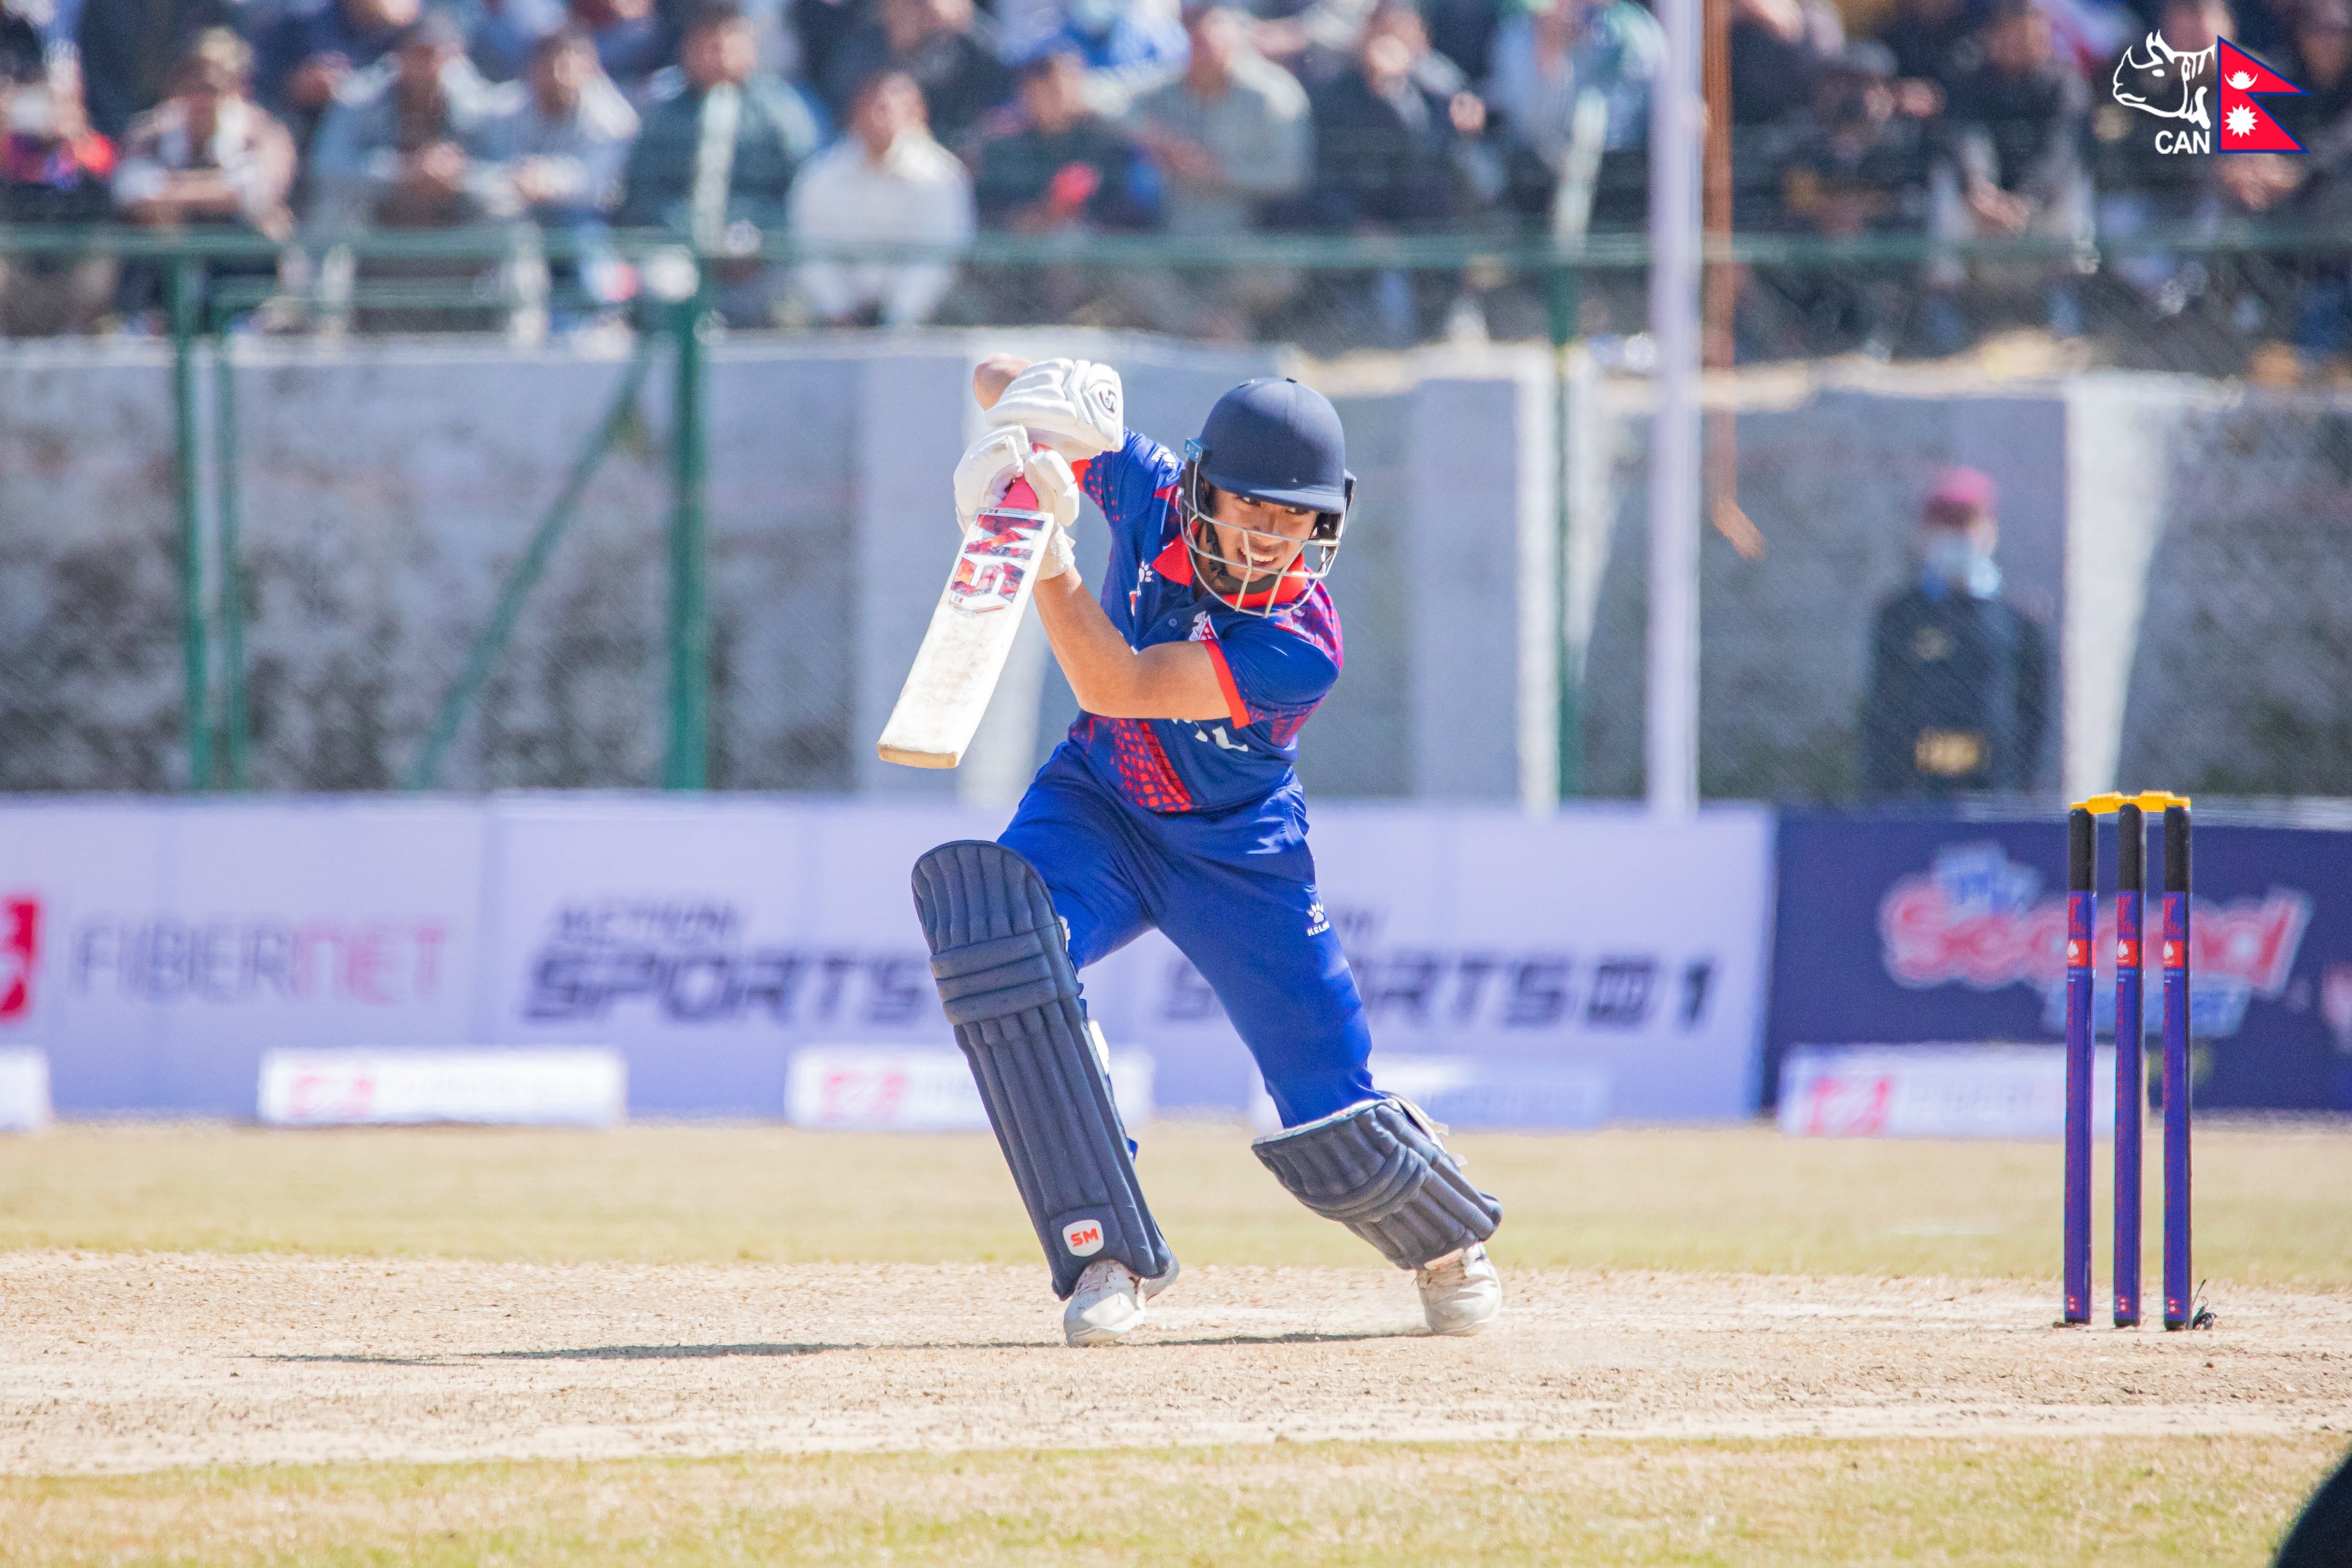 Nepal sets target of 225 runs in Bilateral Series opener against Canada